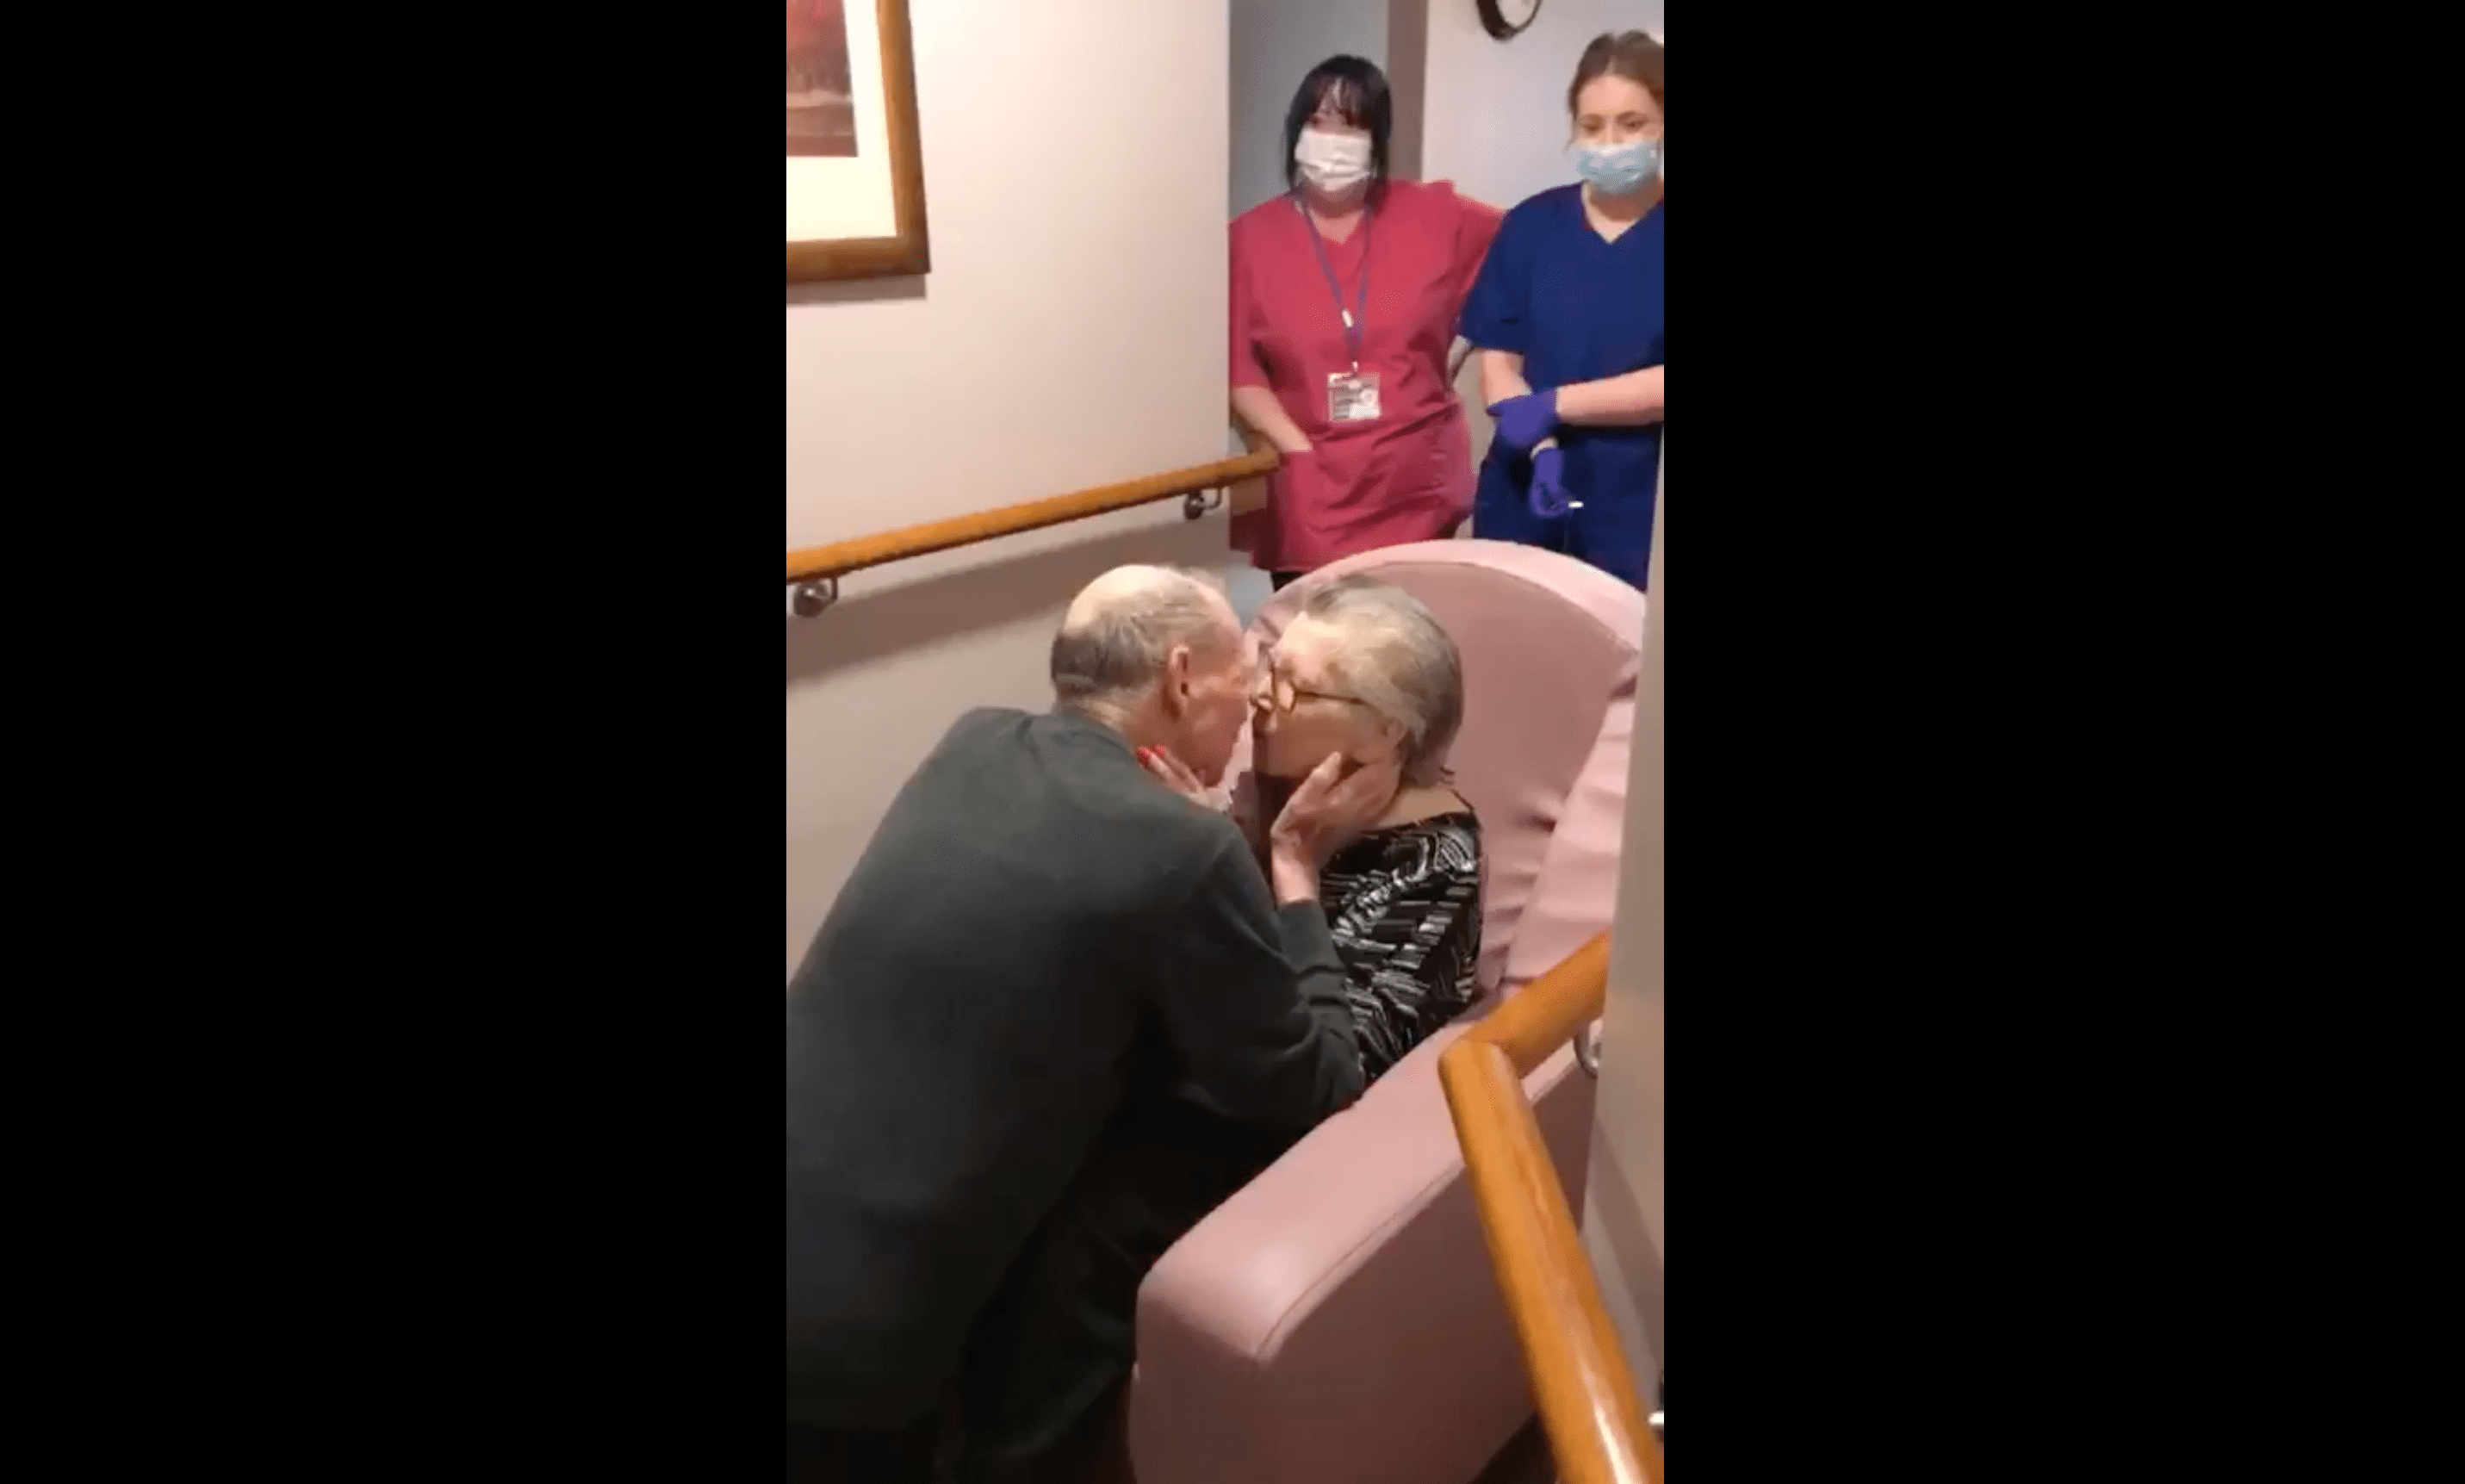 Barbara et Lewis Tunnicliffe partageant un baiser | Source : Facebook / Maison de retraite Bradwell Hall